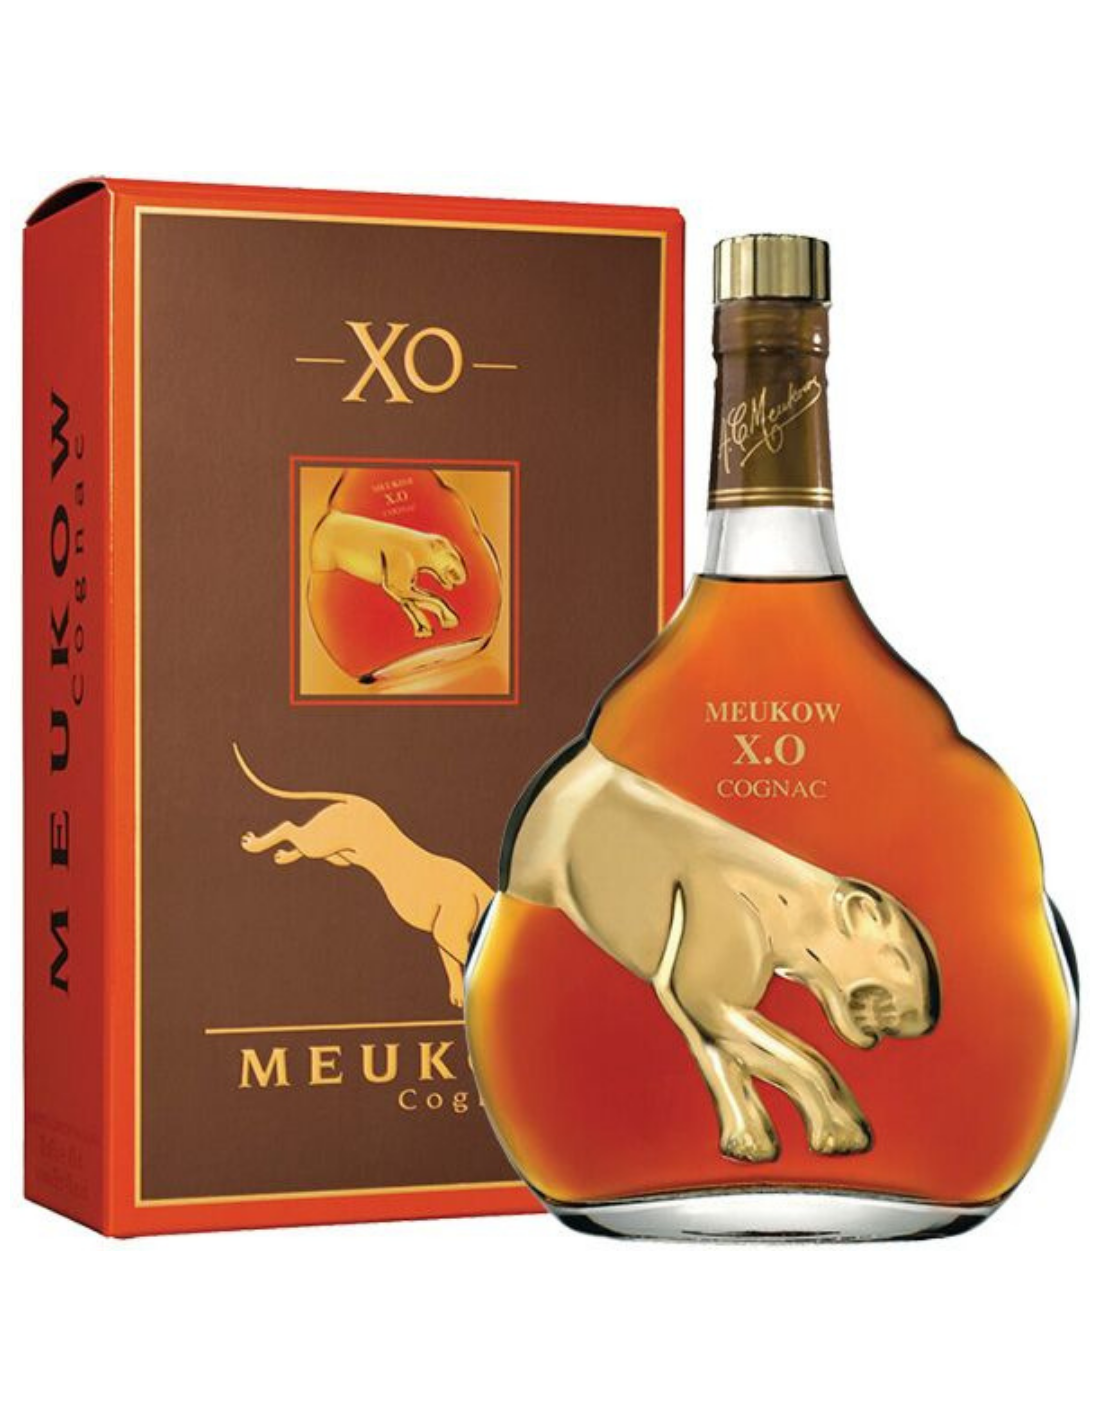 Coniac Meukow XO, 40% alc., 0.7L, Franta alcooldiscount.ro